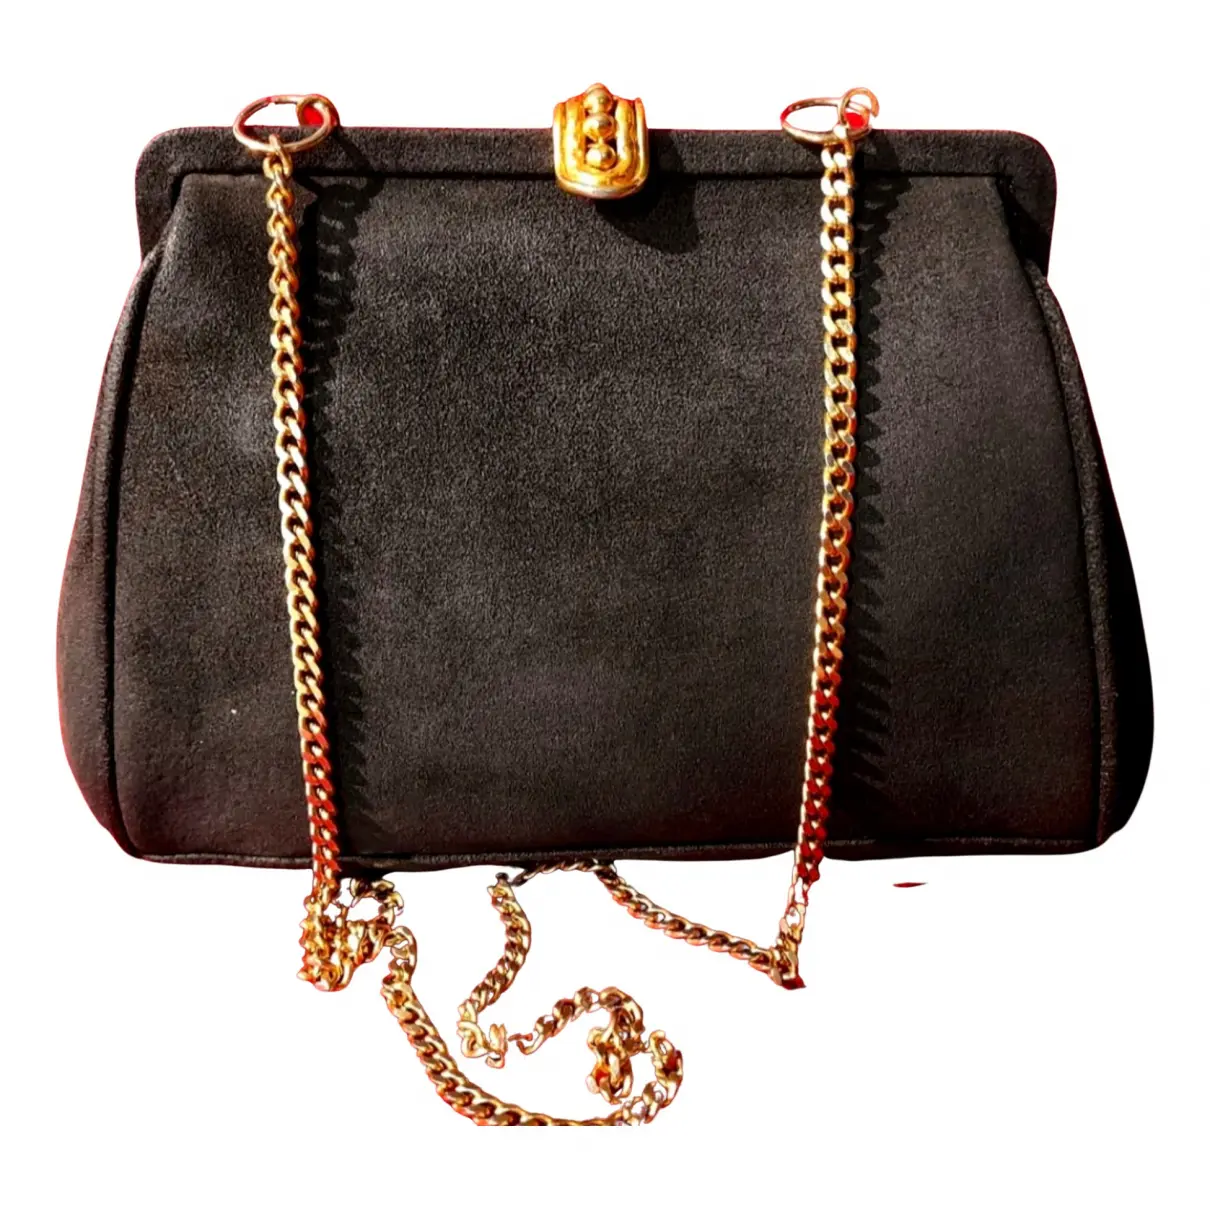 Leather handbag Emanuel Ungaro - Vintage